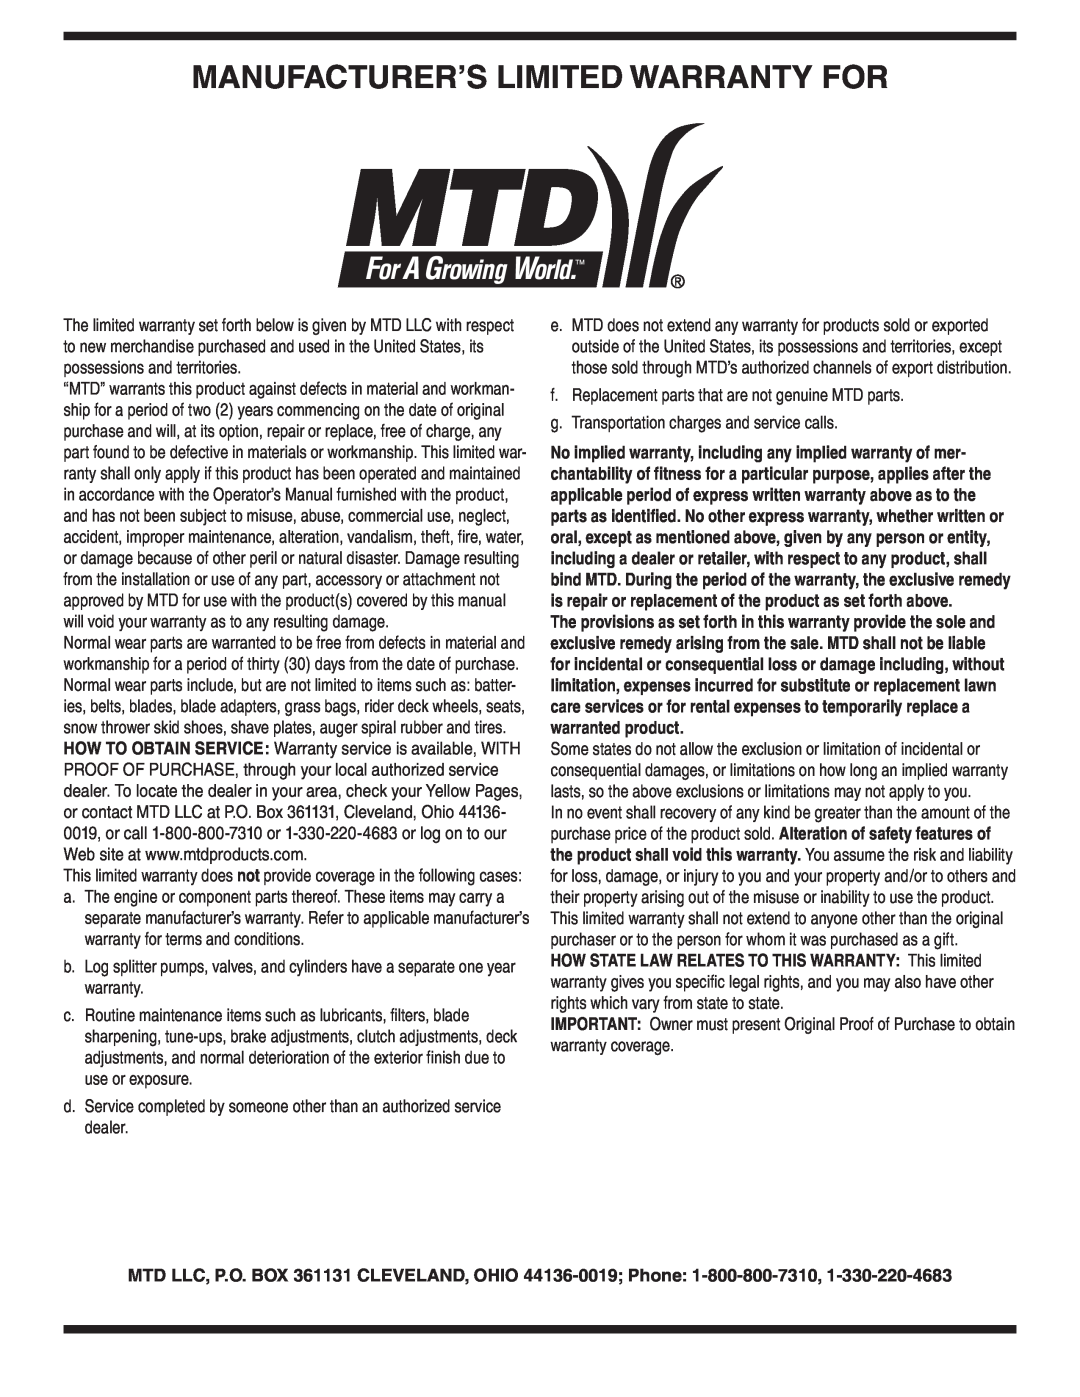 MTD Series 430 warranty Manufacturer’S Limited Warranty For 